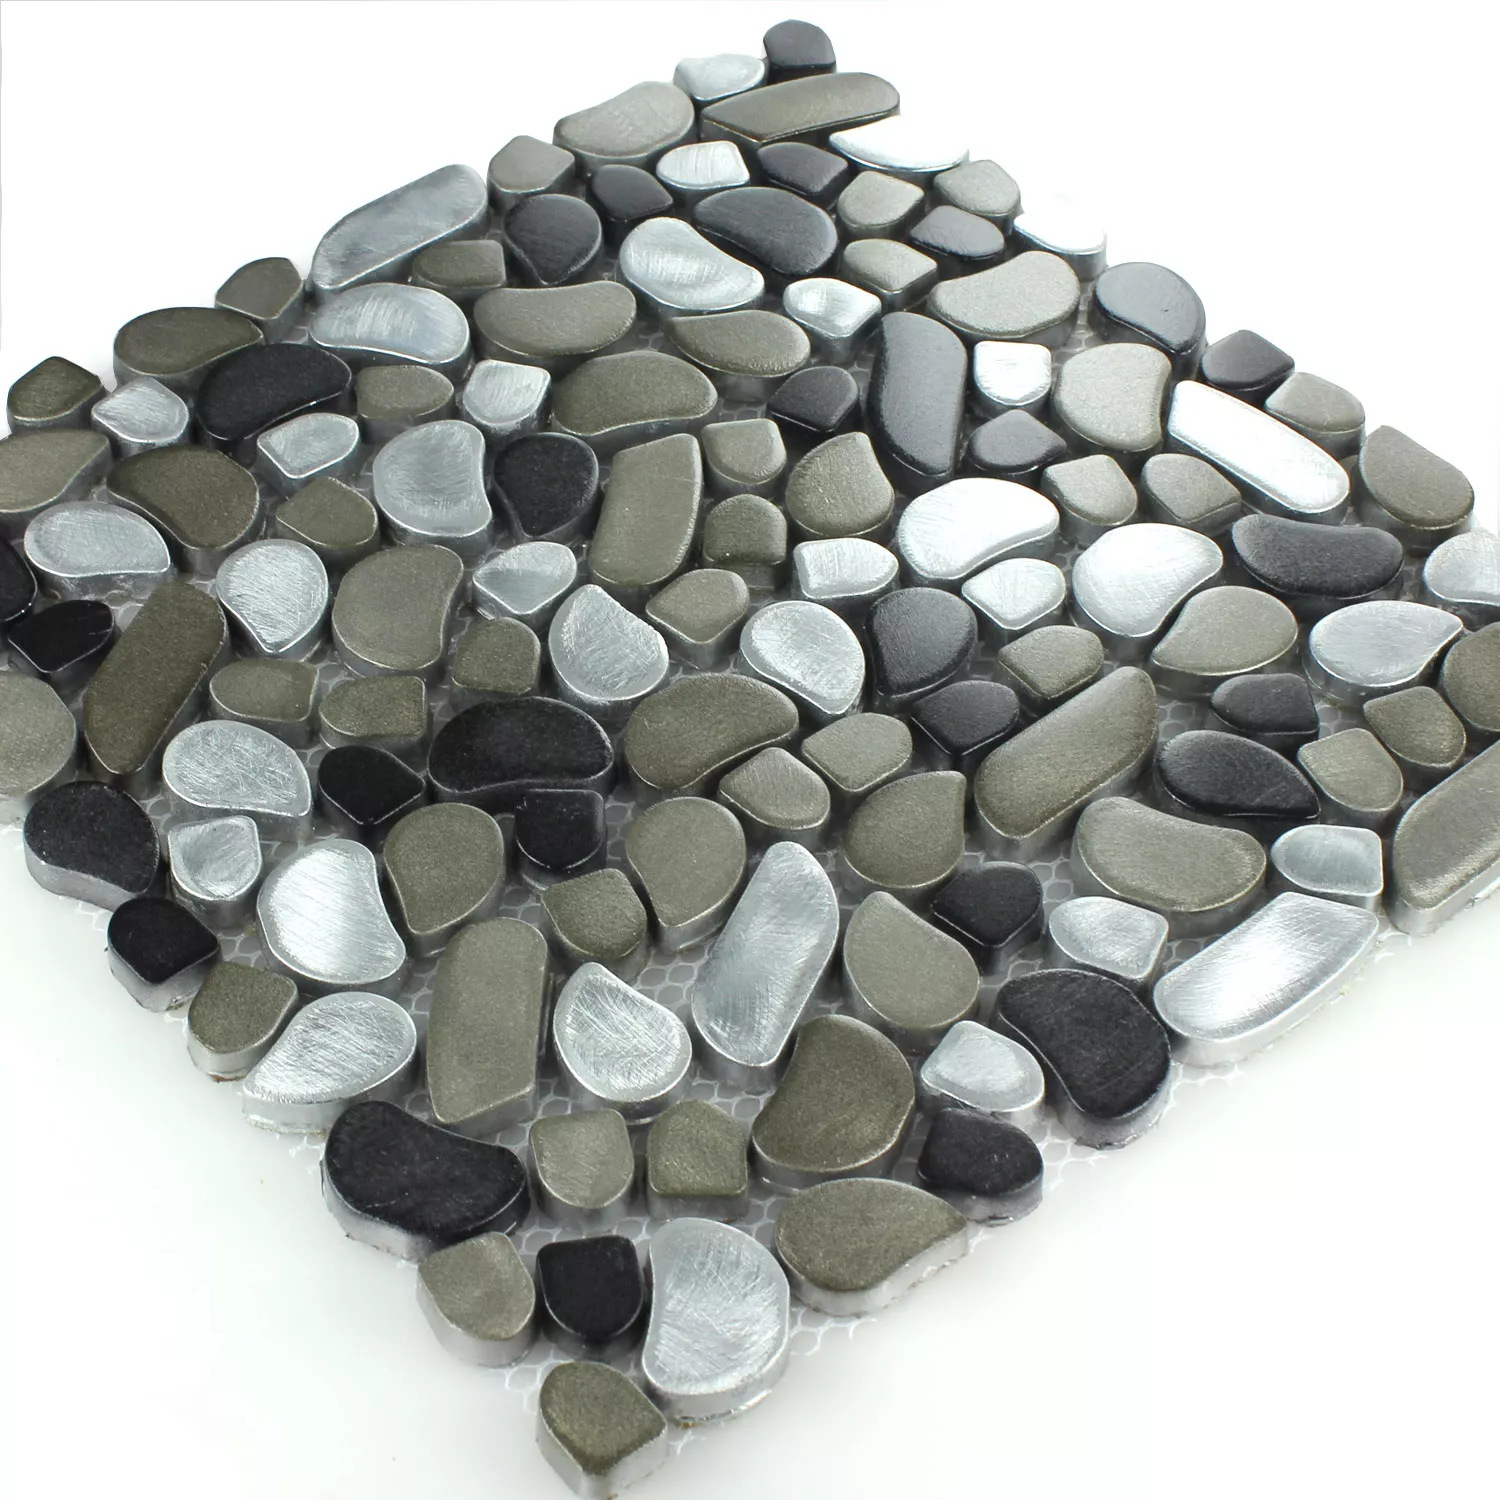 Design Stainless Steel Pebble Mosaic Black Silver